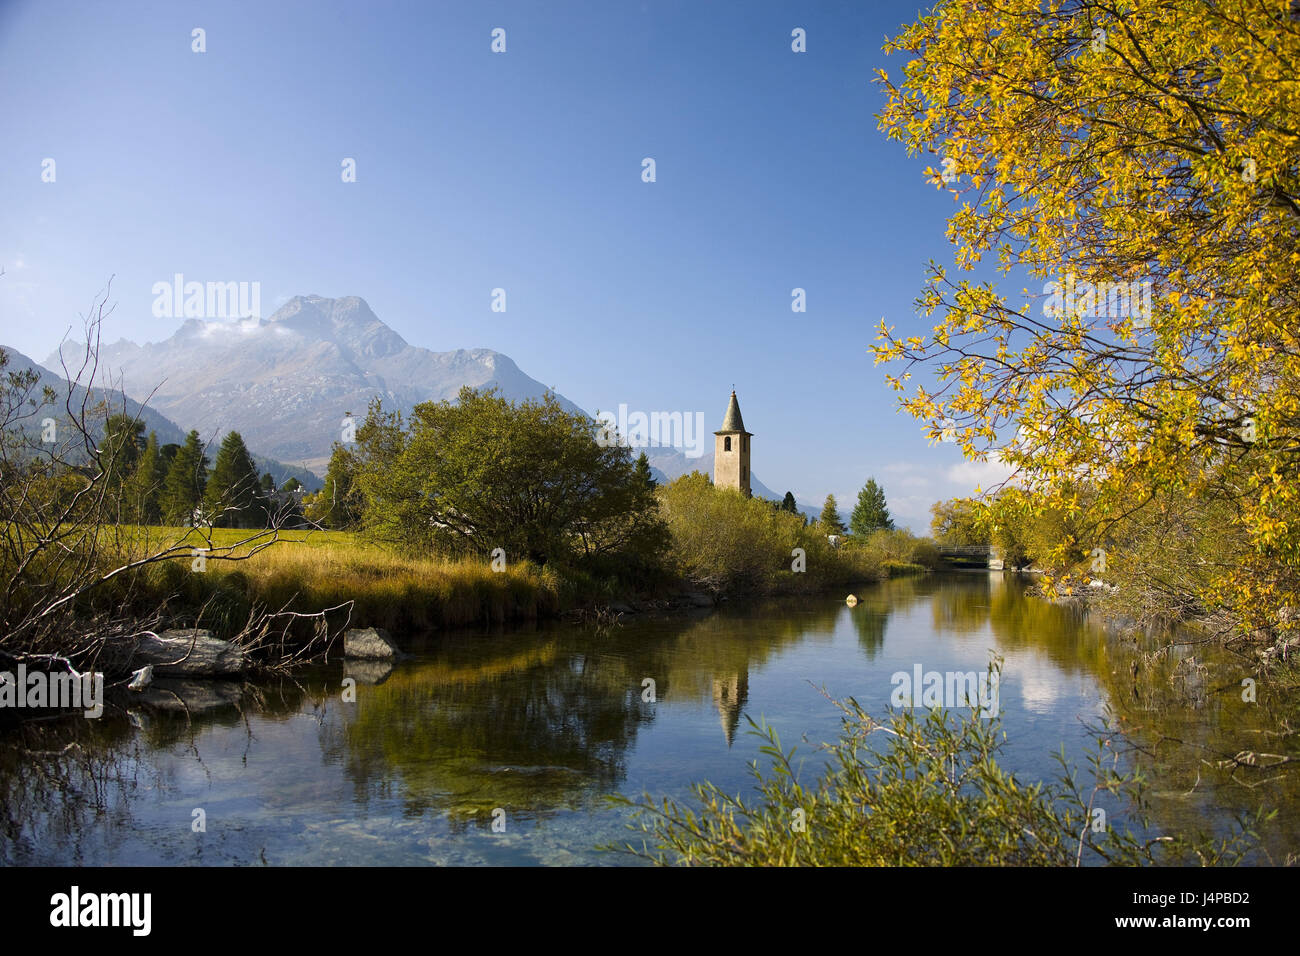 Switzerland, Sils, steeple, river, scenery, Stock Photo